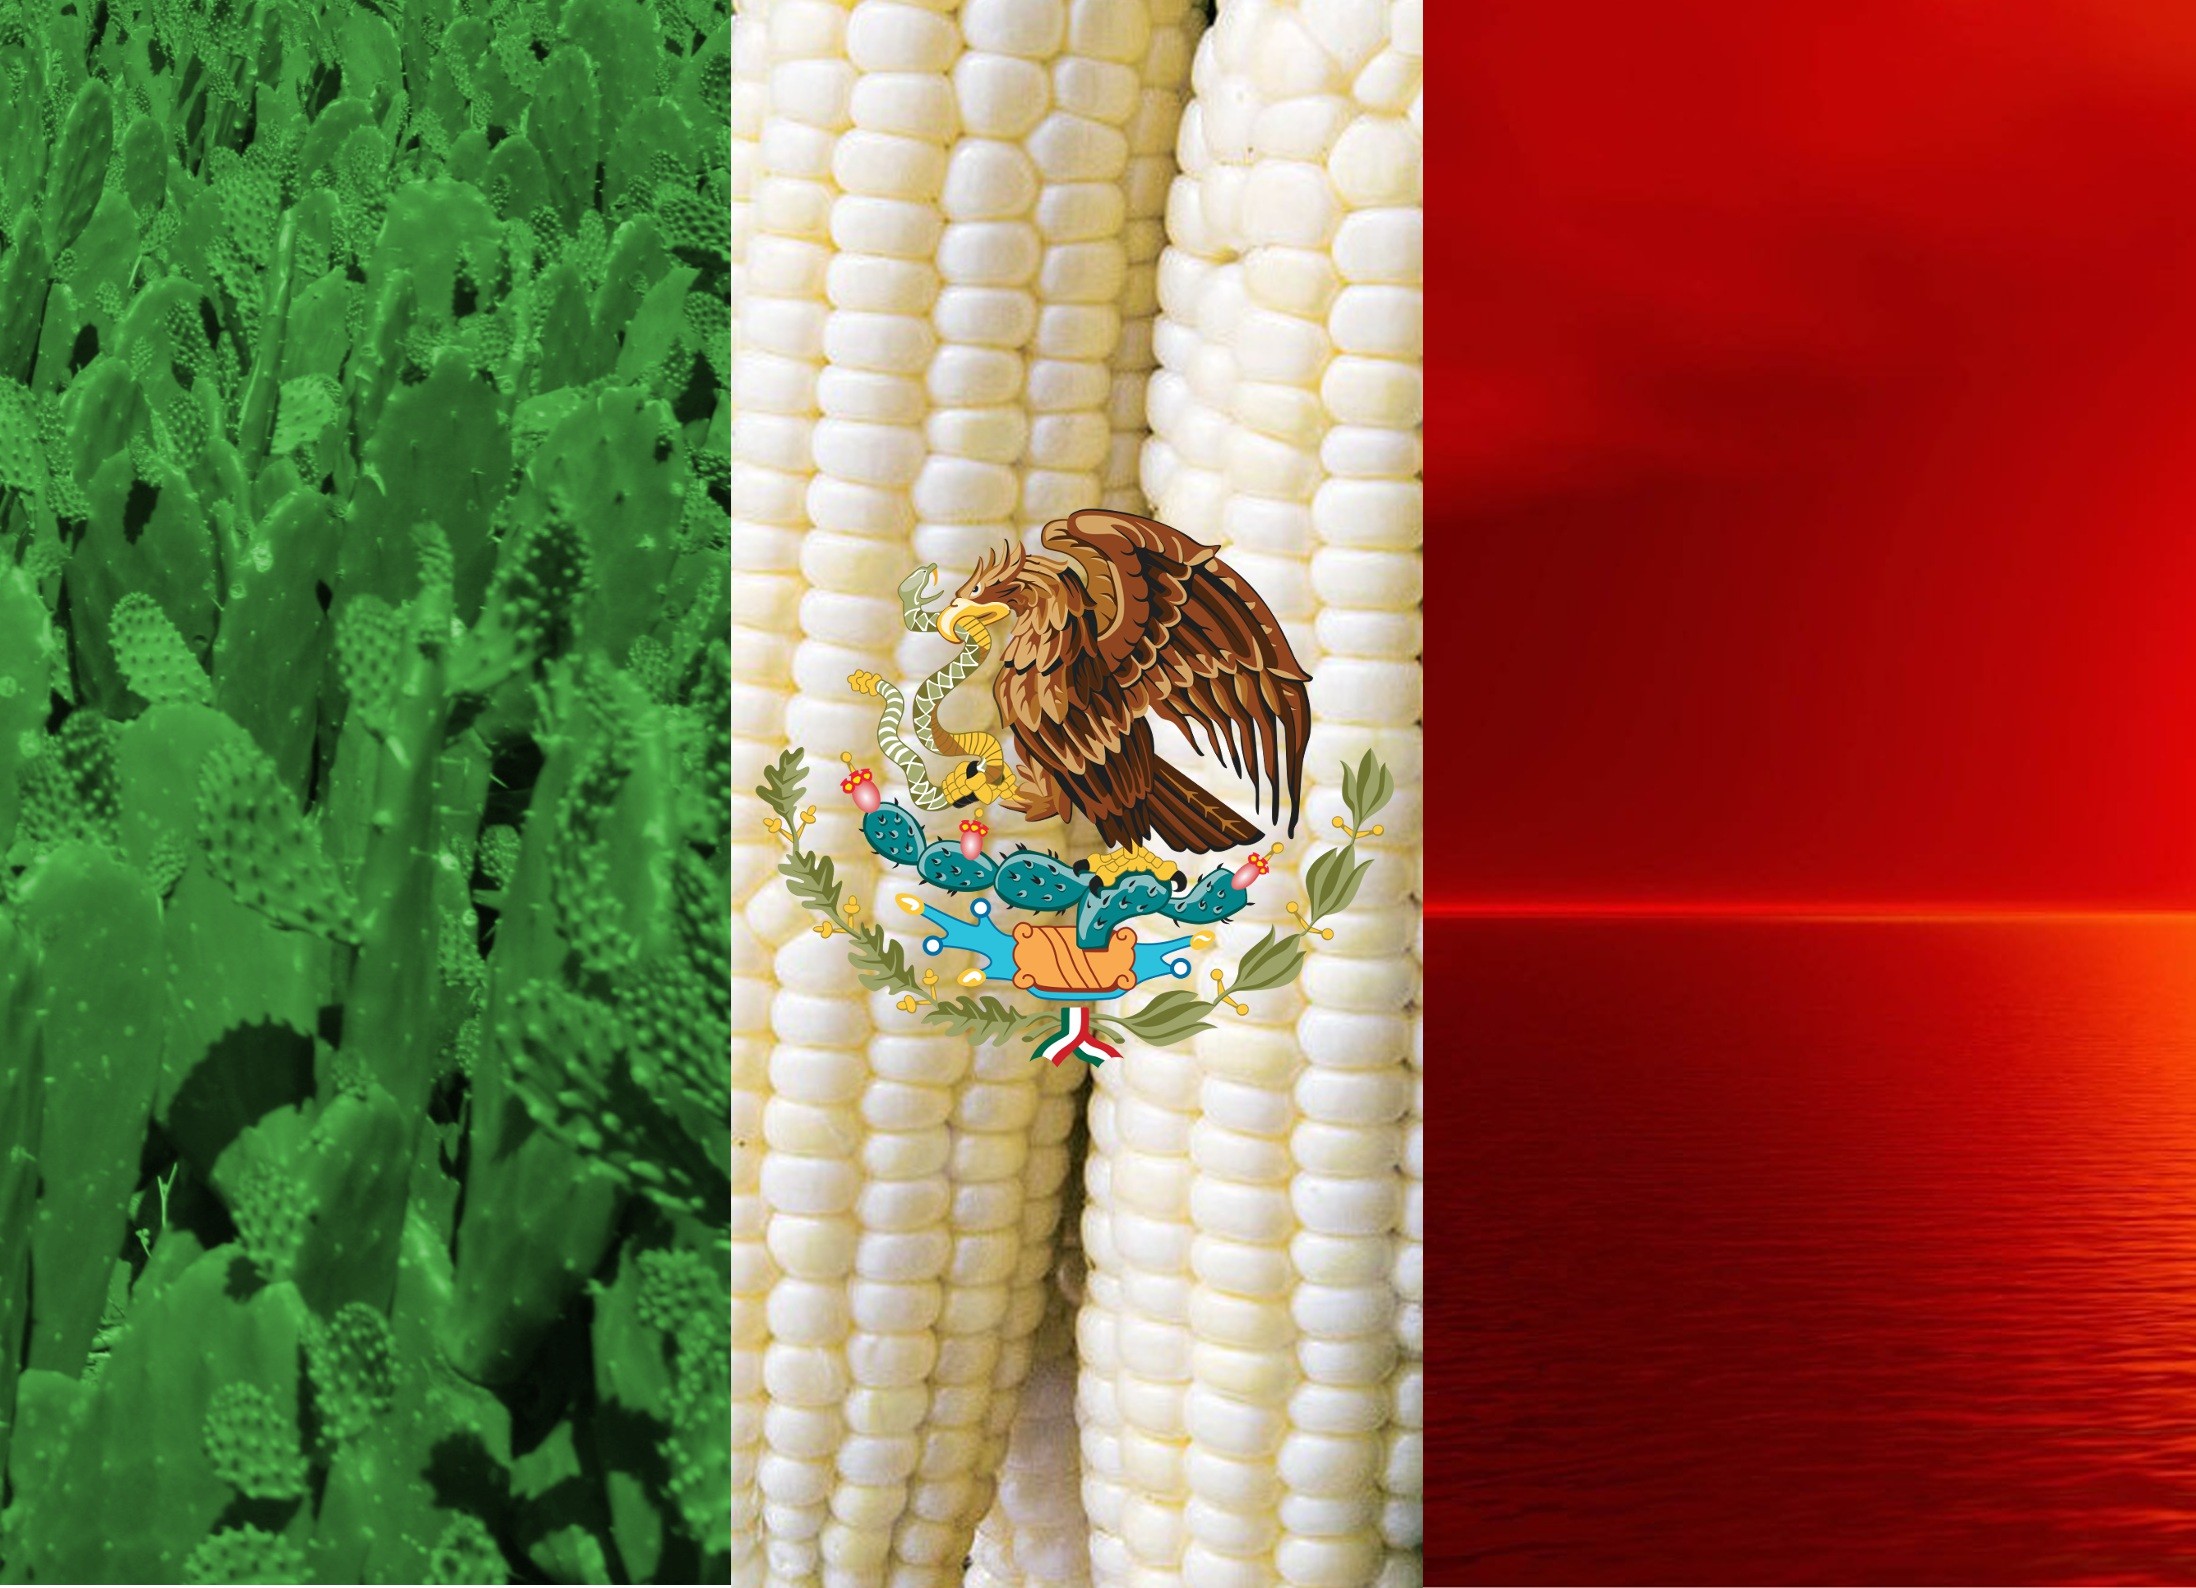 2196x1588 Mexico Flag HD Wallpaper, Background Image | Viva Mexico | Pinterest |  Mexico flag